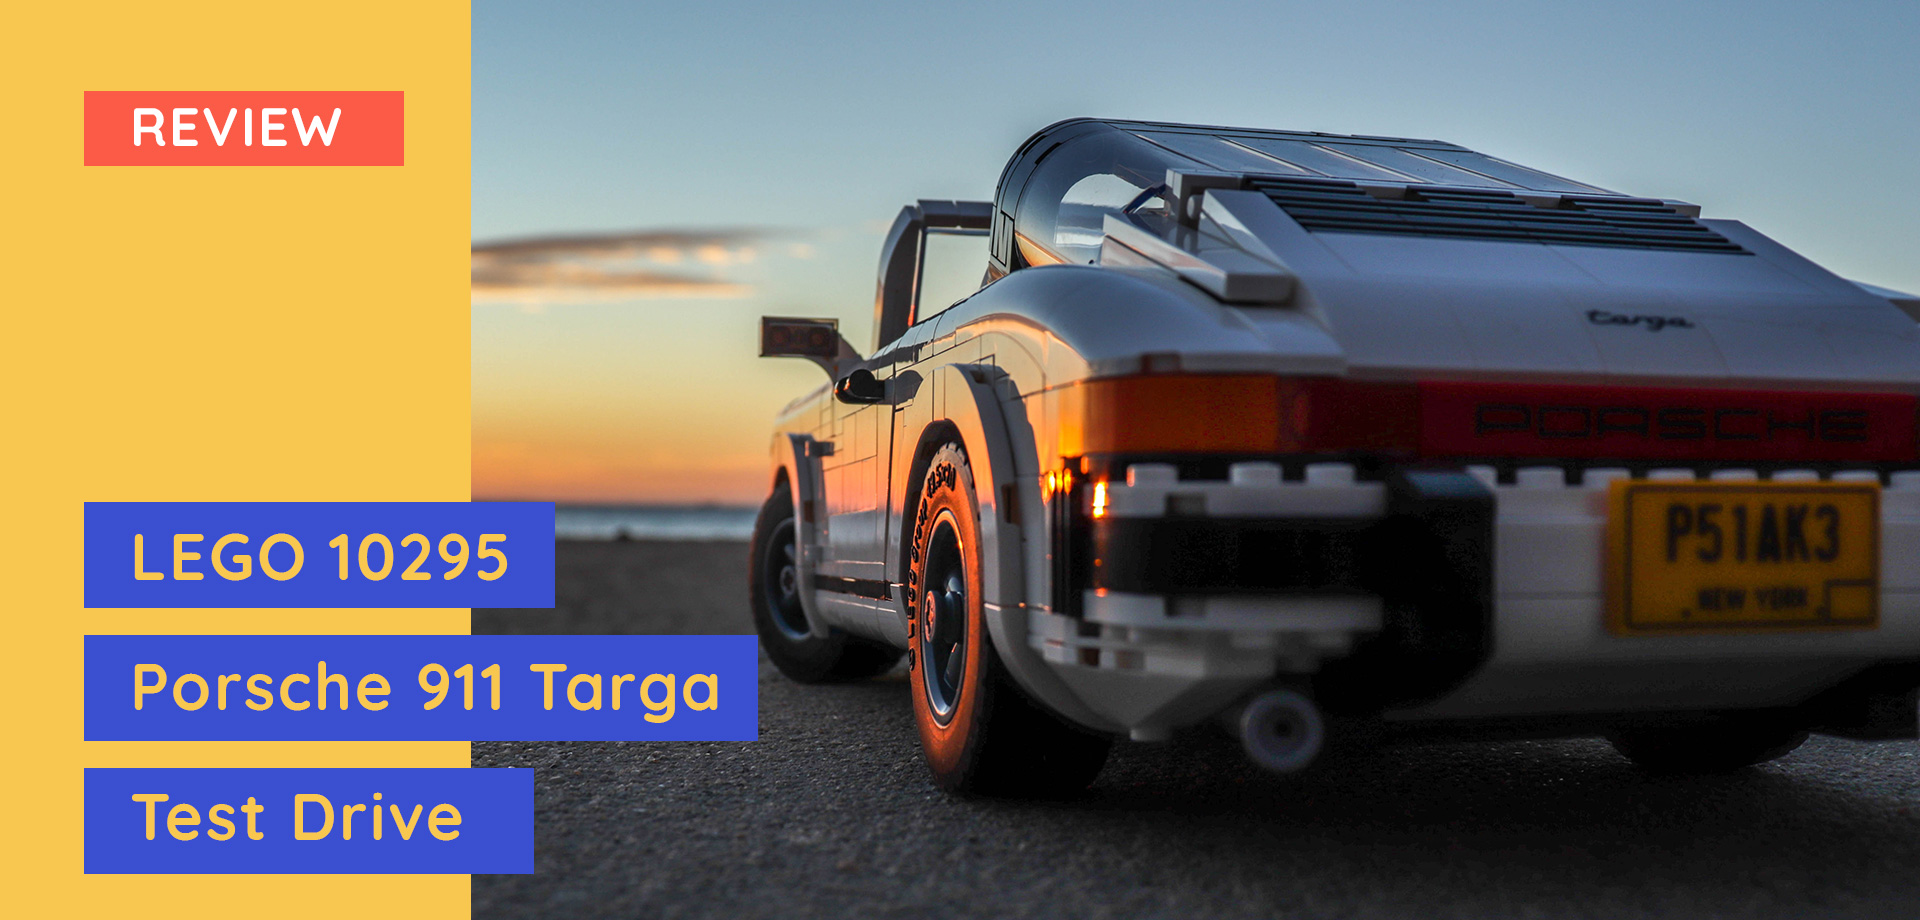 Built the 10295 Porsche 911 as a combo between turbo and targa